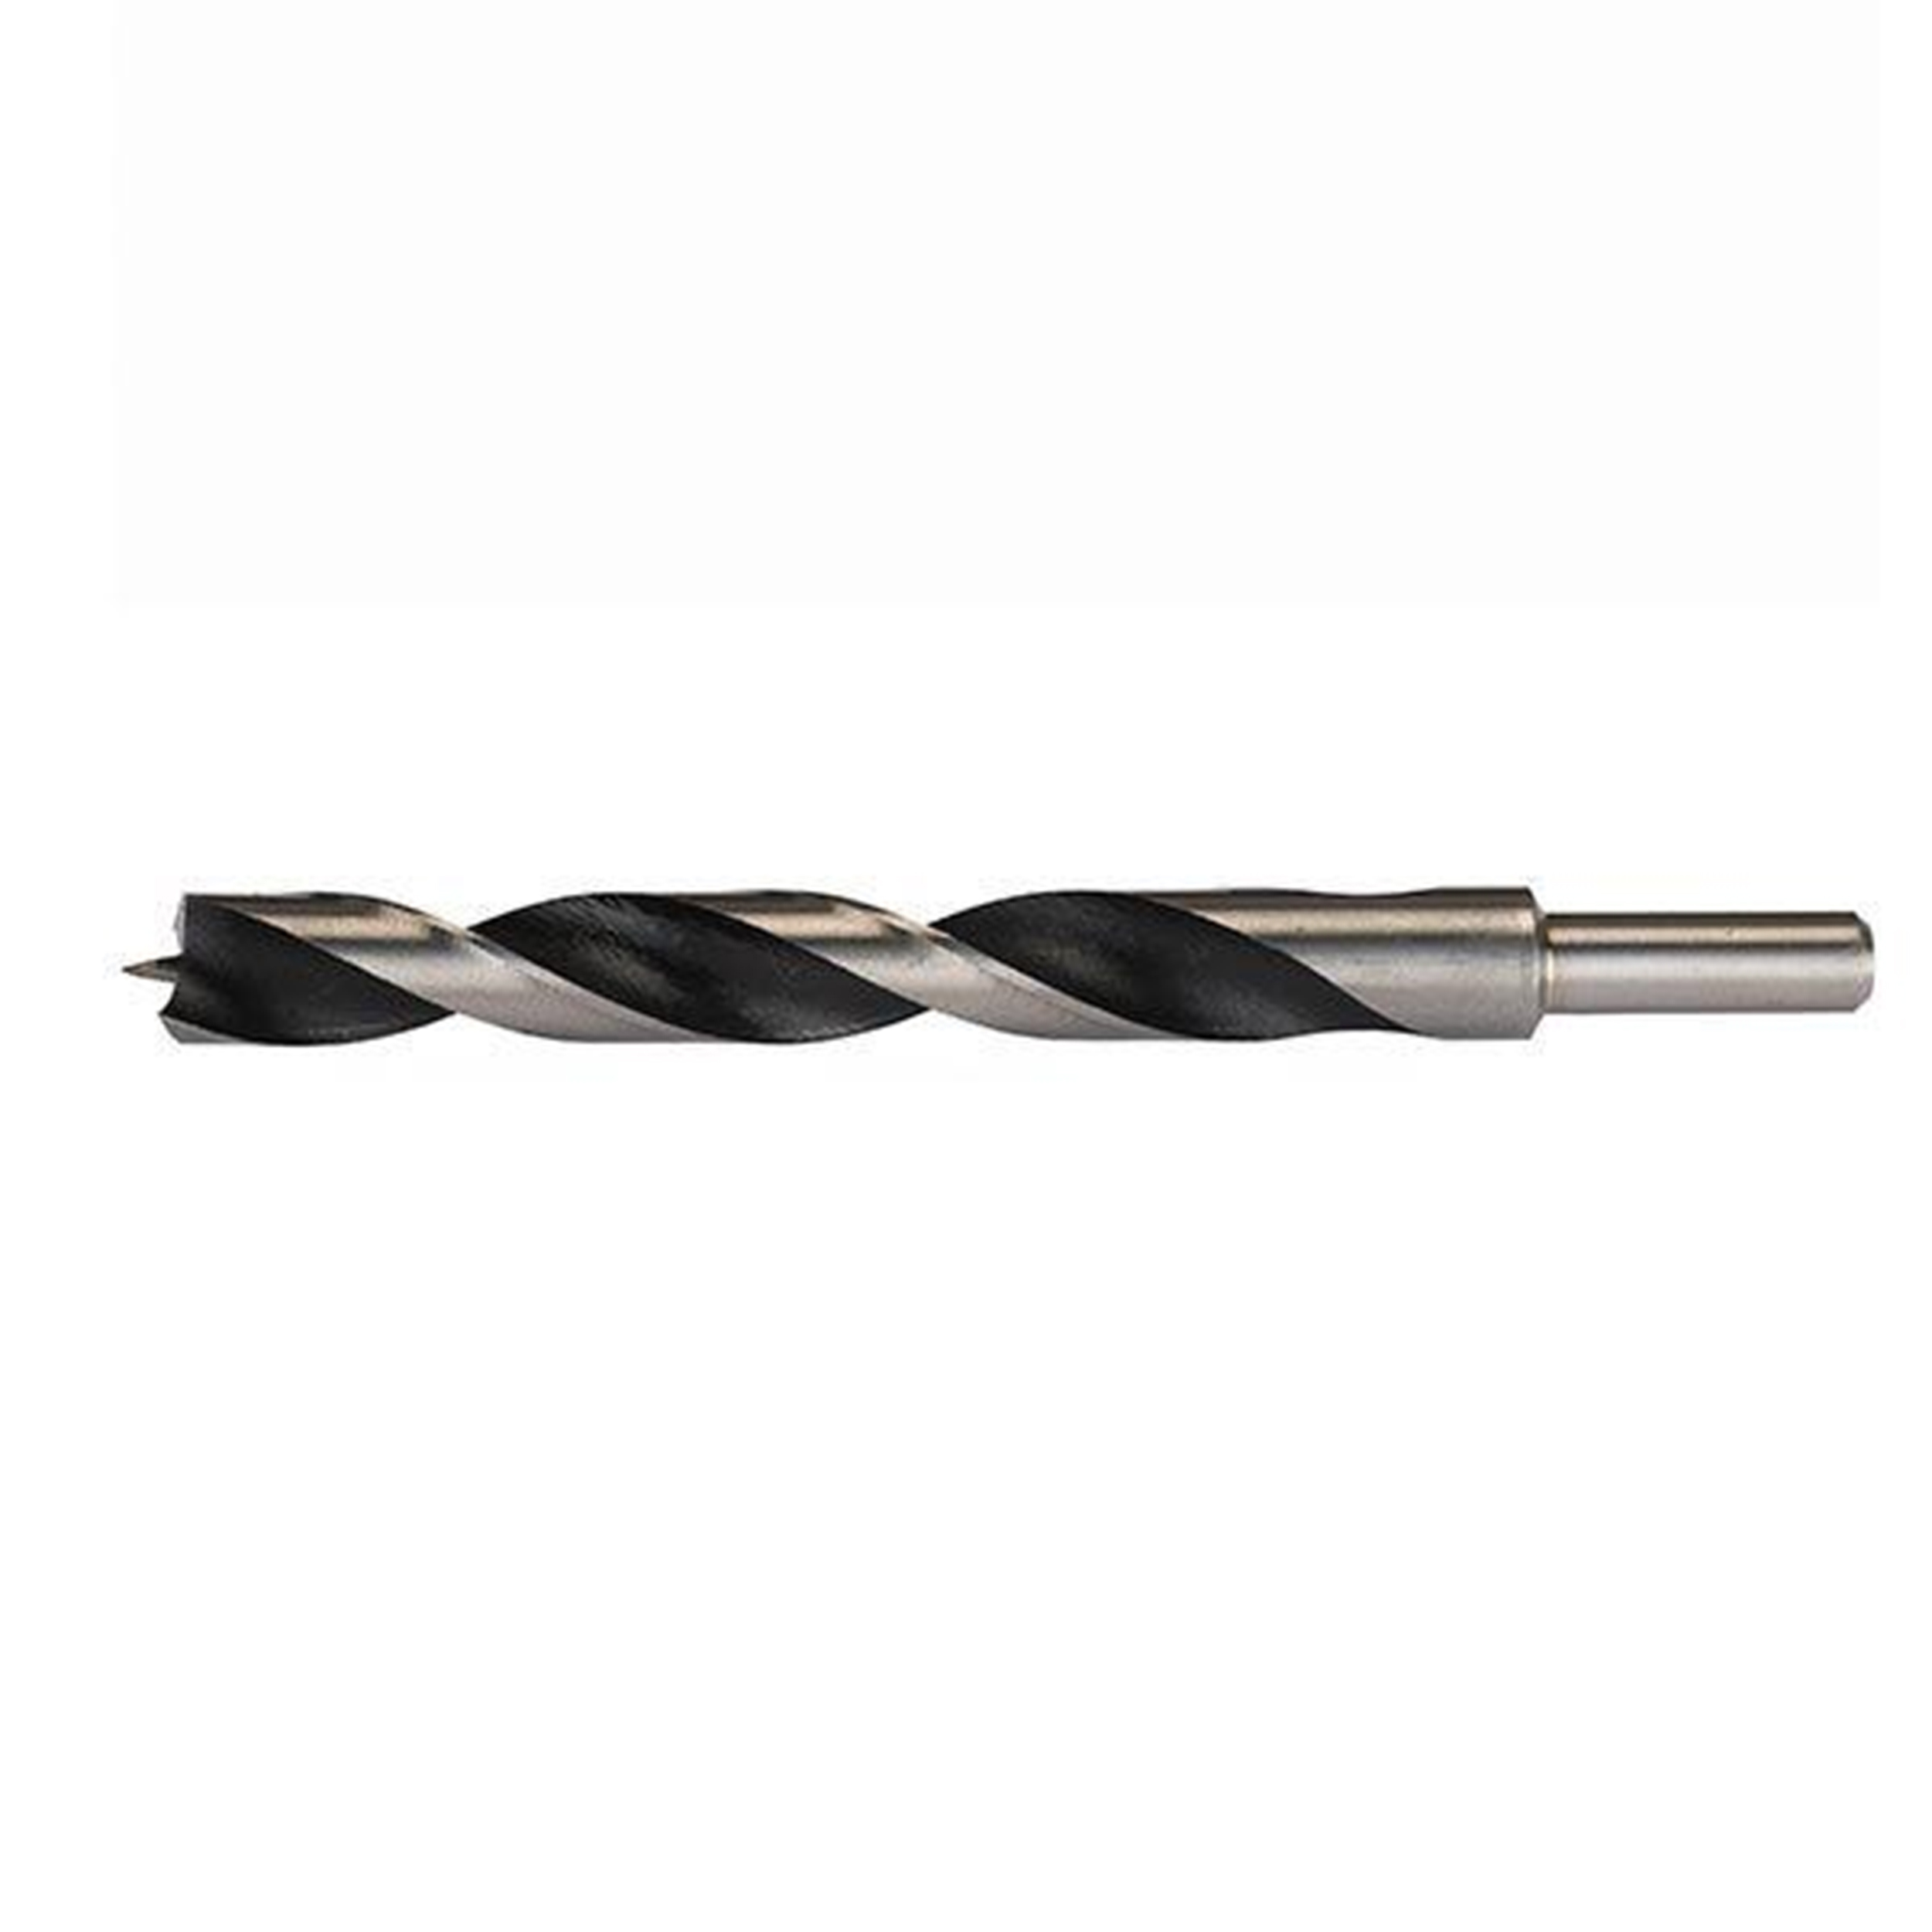 5/8-inch Chrome-vanadium Steel Brad Point Drill Bit